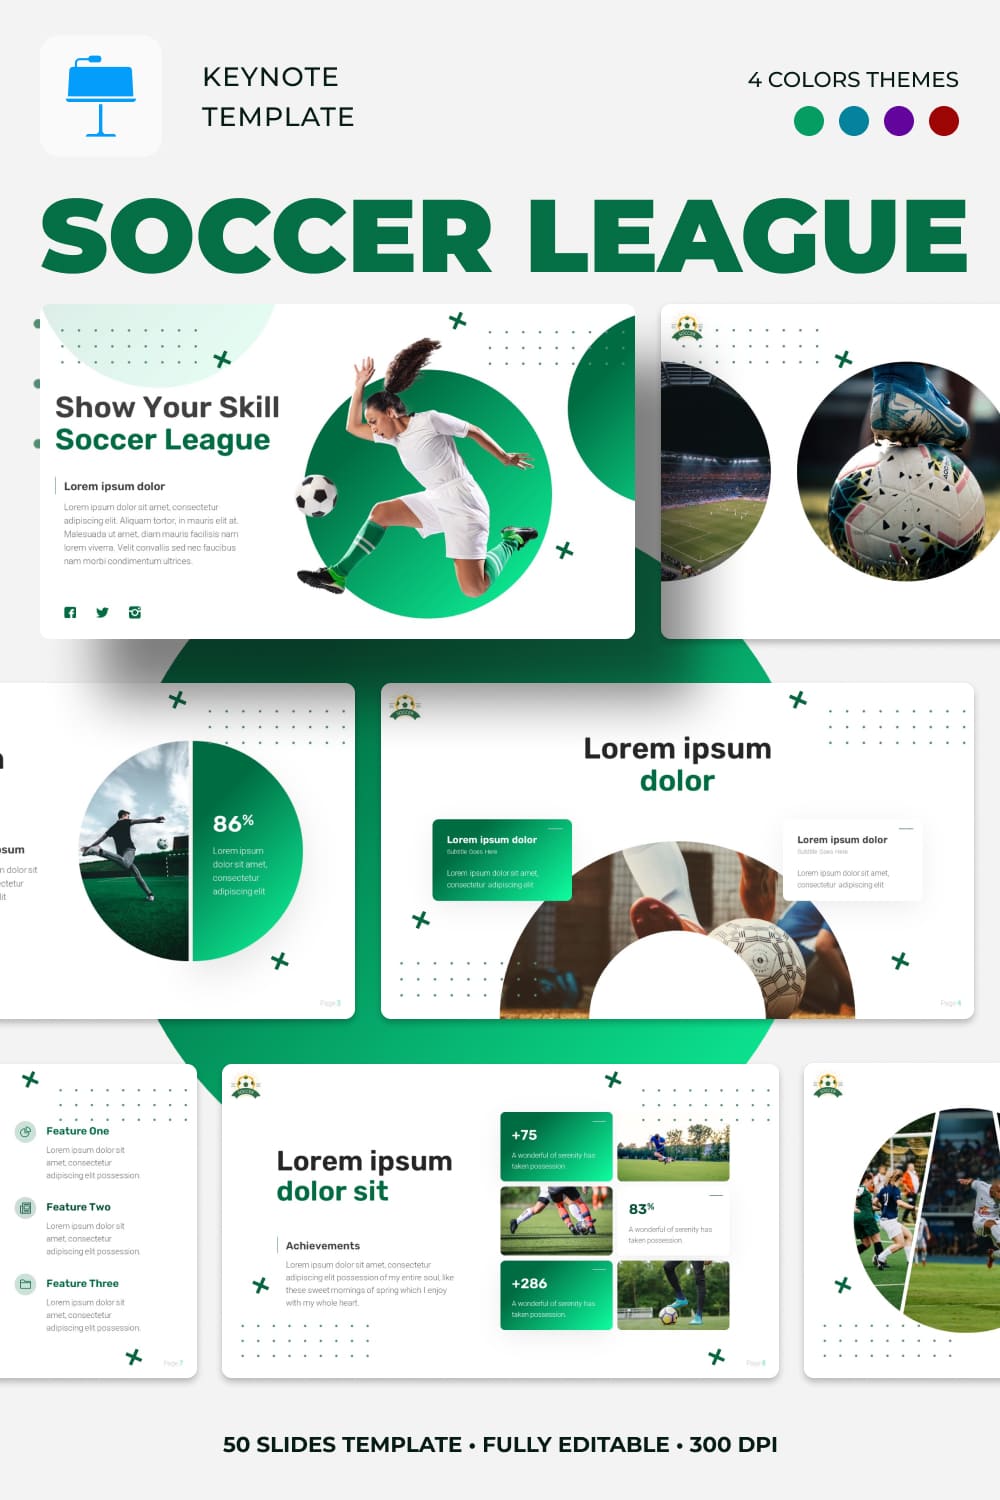 Soccer League Keynote Template - Pinterest.